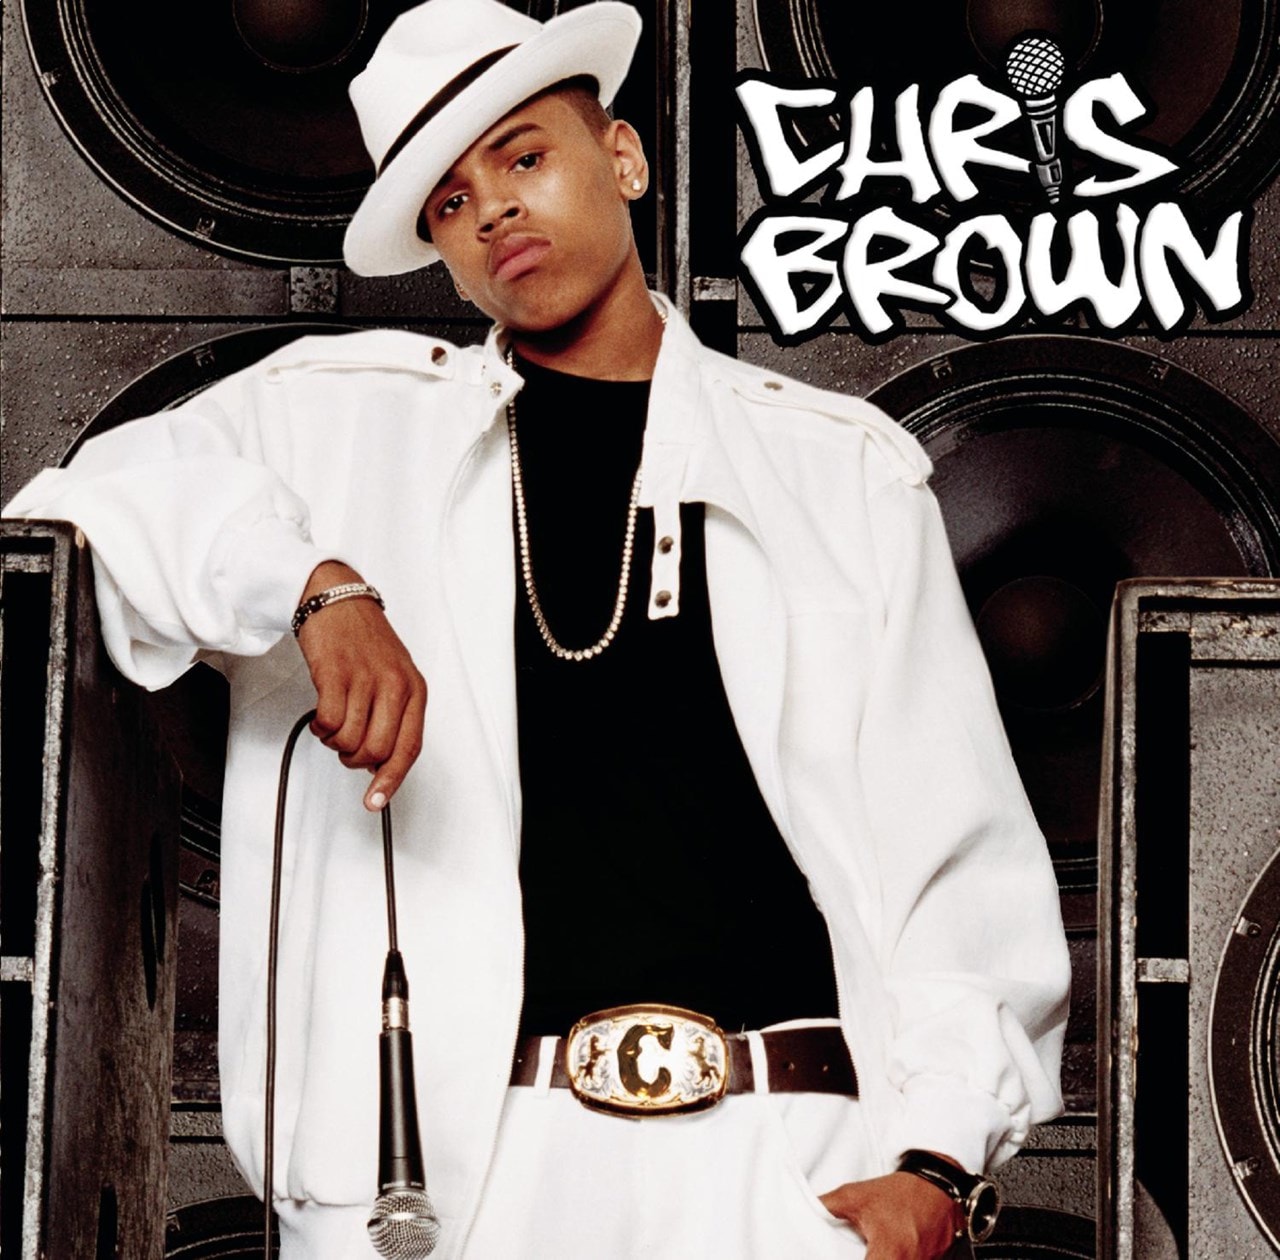  Chris  Brown  CD Album Free shipping over 20 HMV Store 